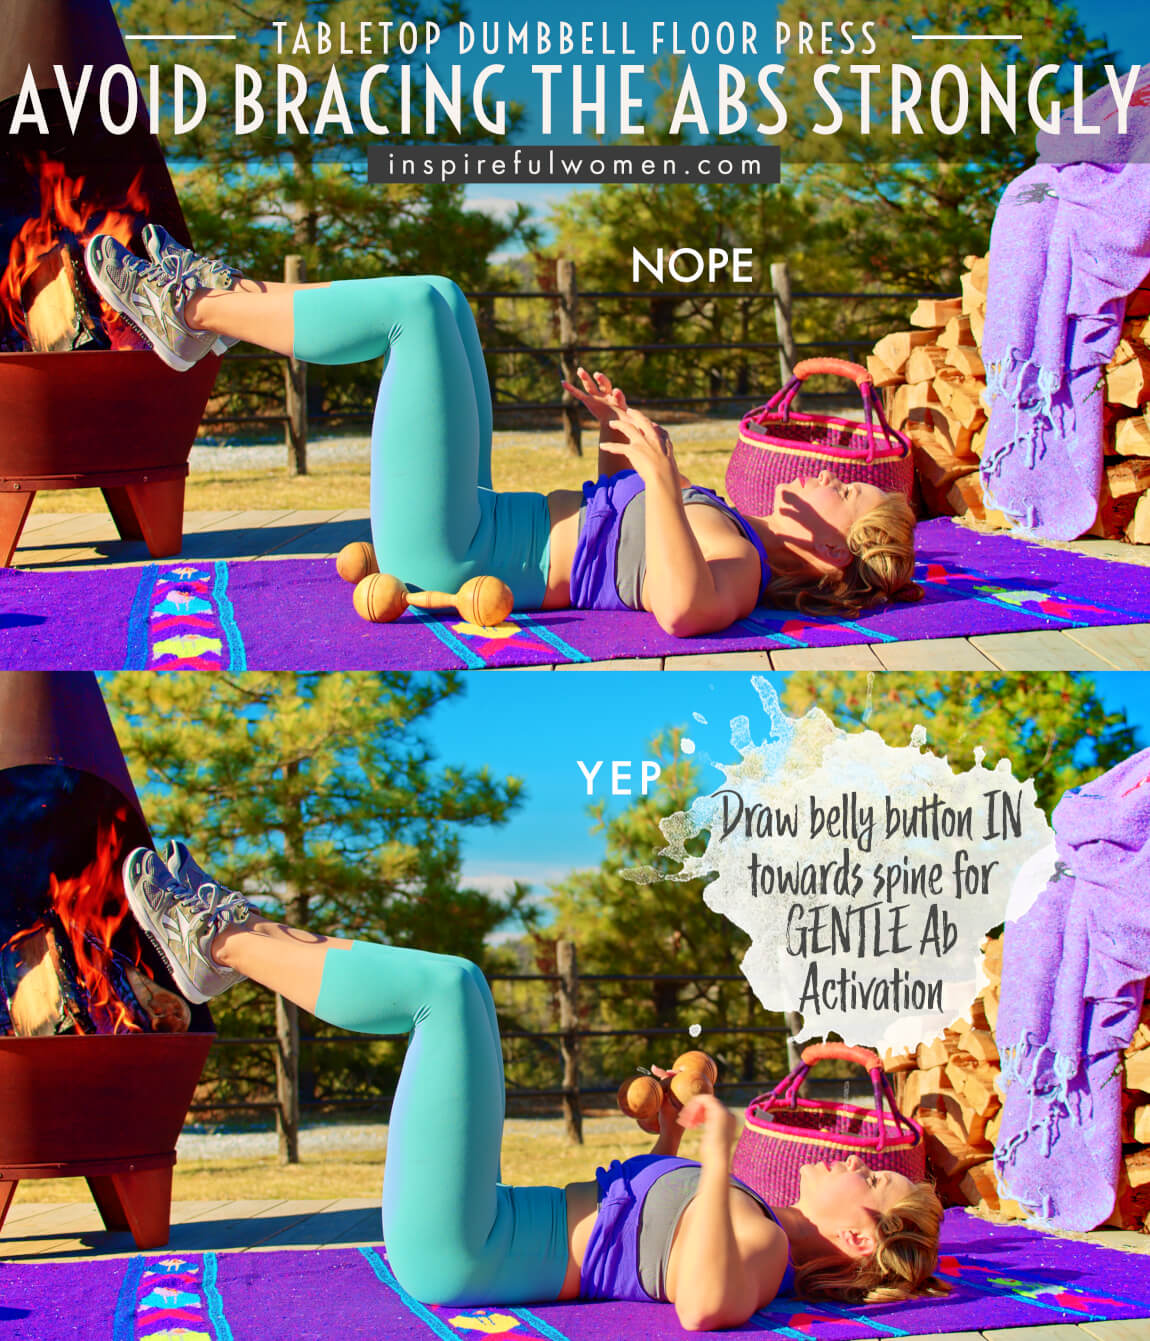 avoid-bracing-abs-strongly-tabletop-dumbbell-floor-press-leg-exercise-proper-form